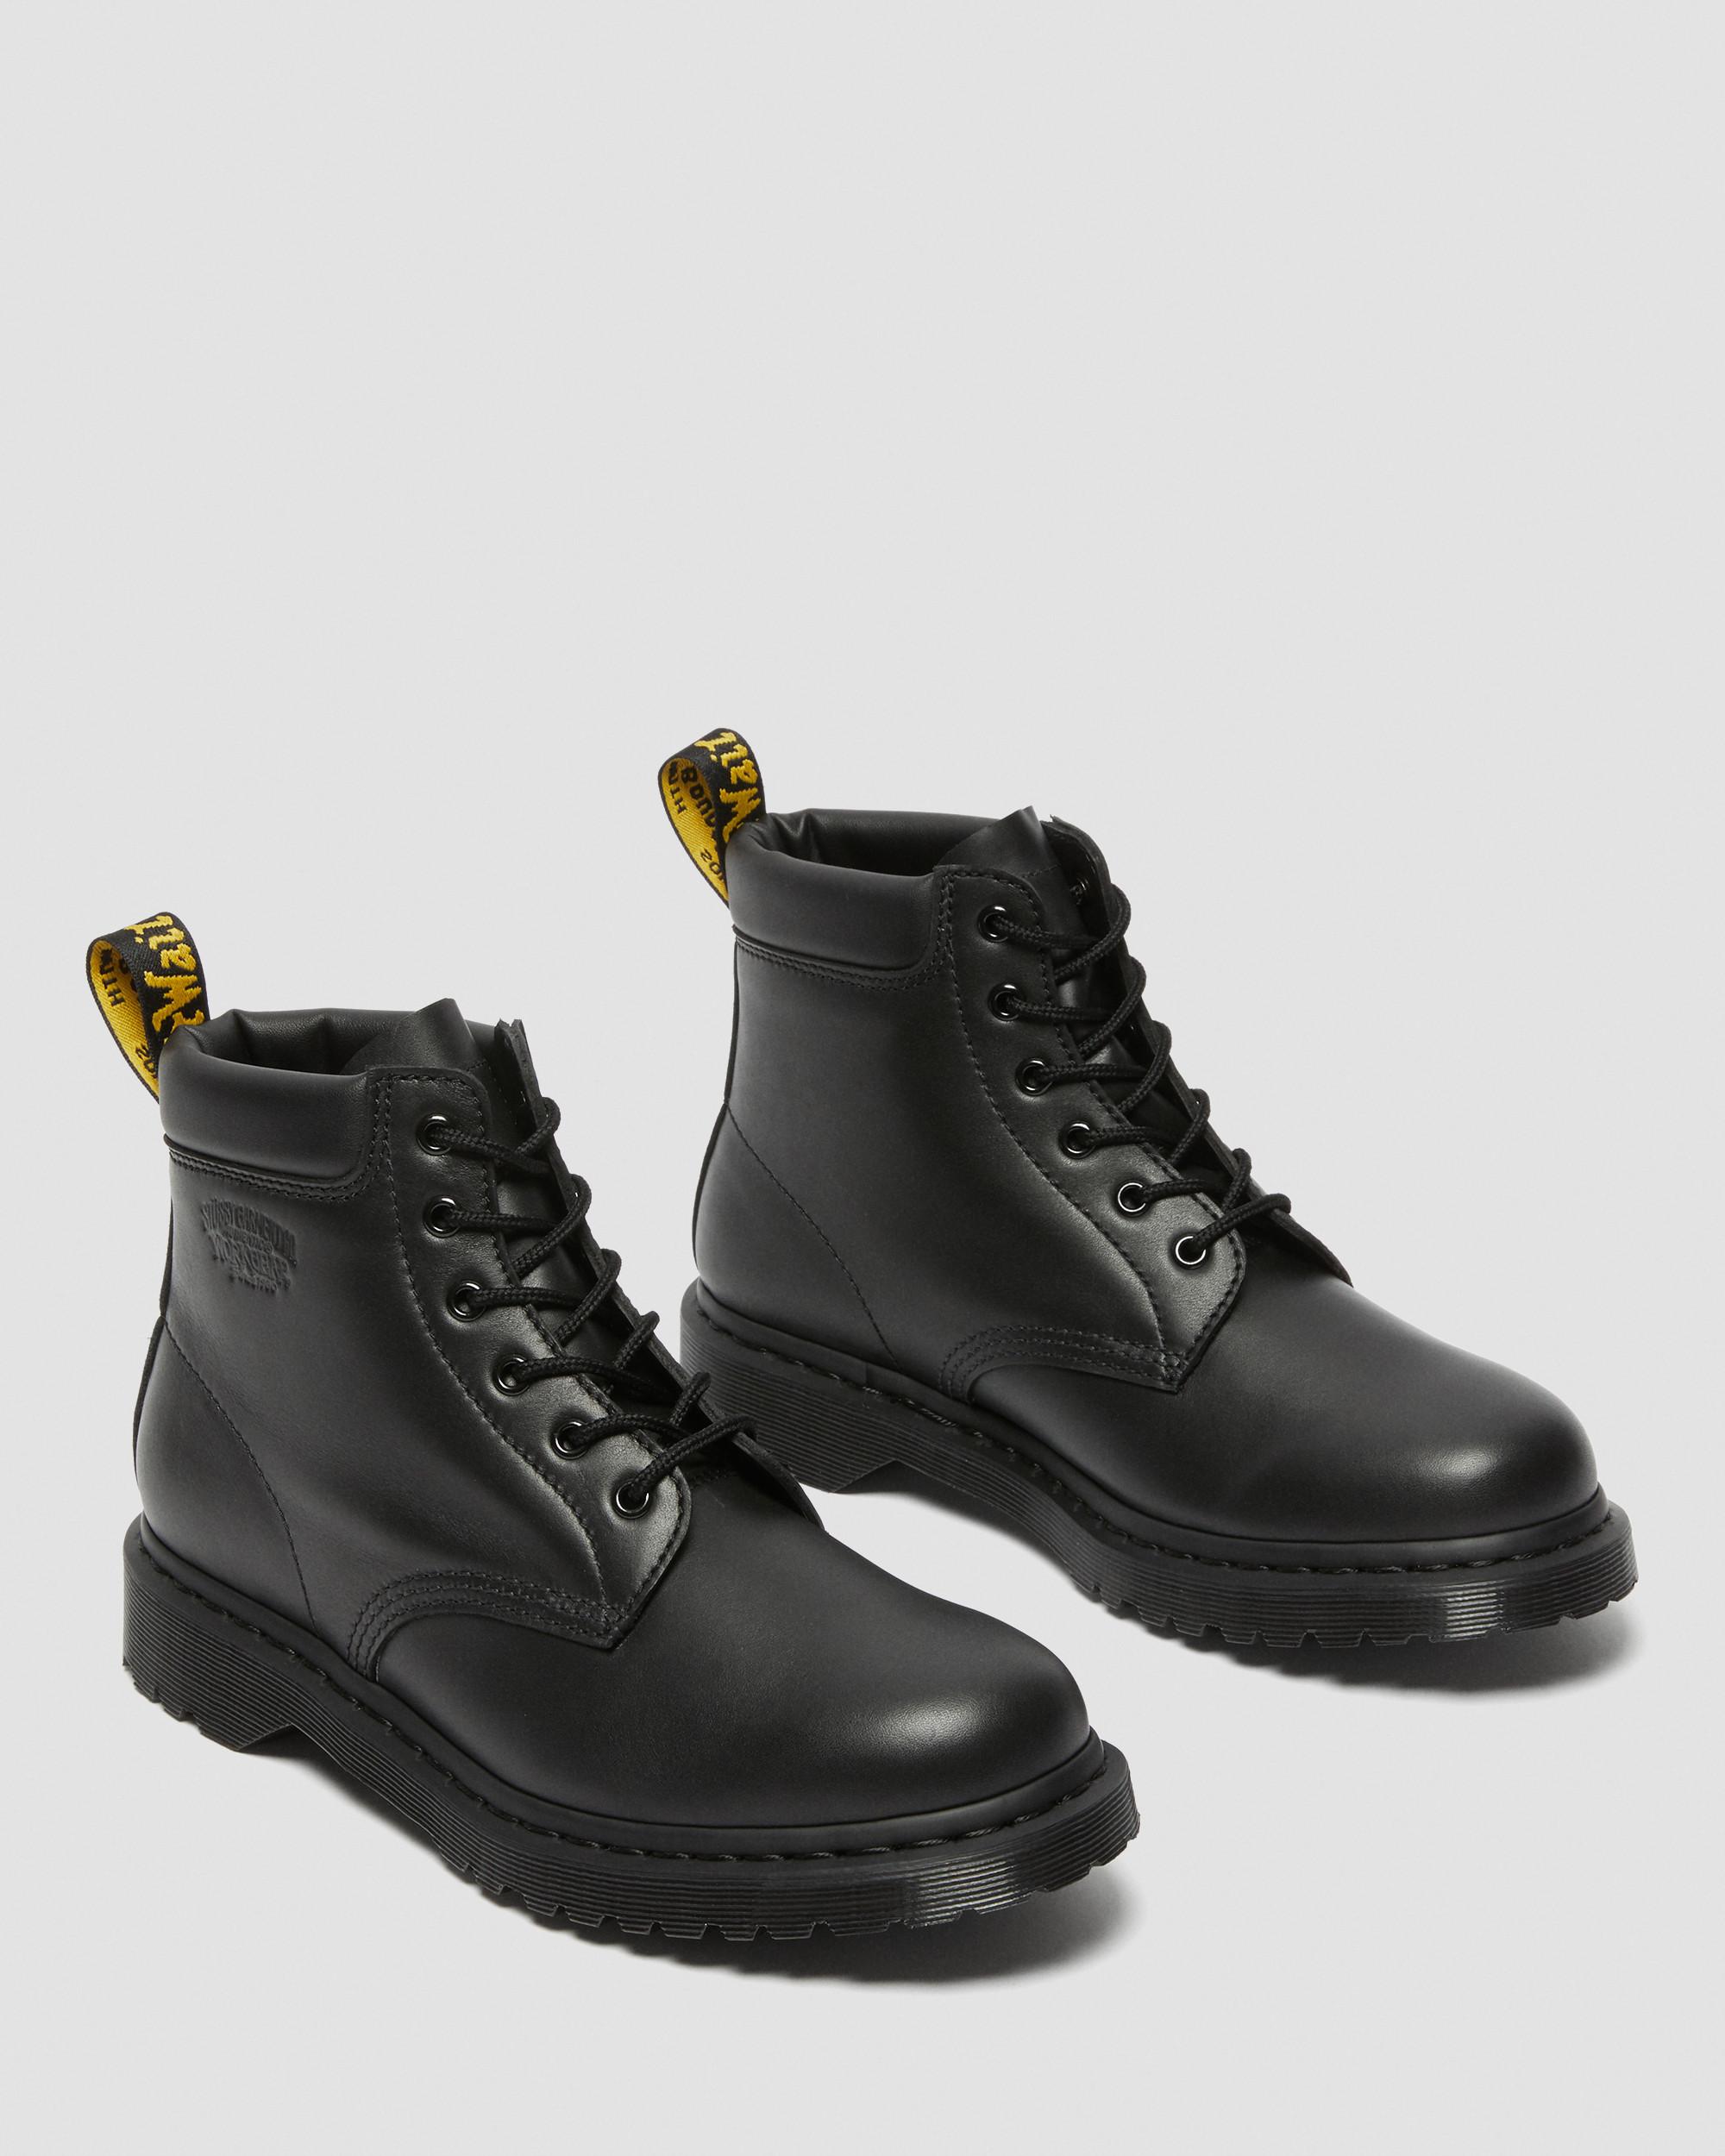 939 Stüssy Leather Ankle Boots, Black | Dr. Martens